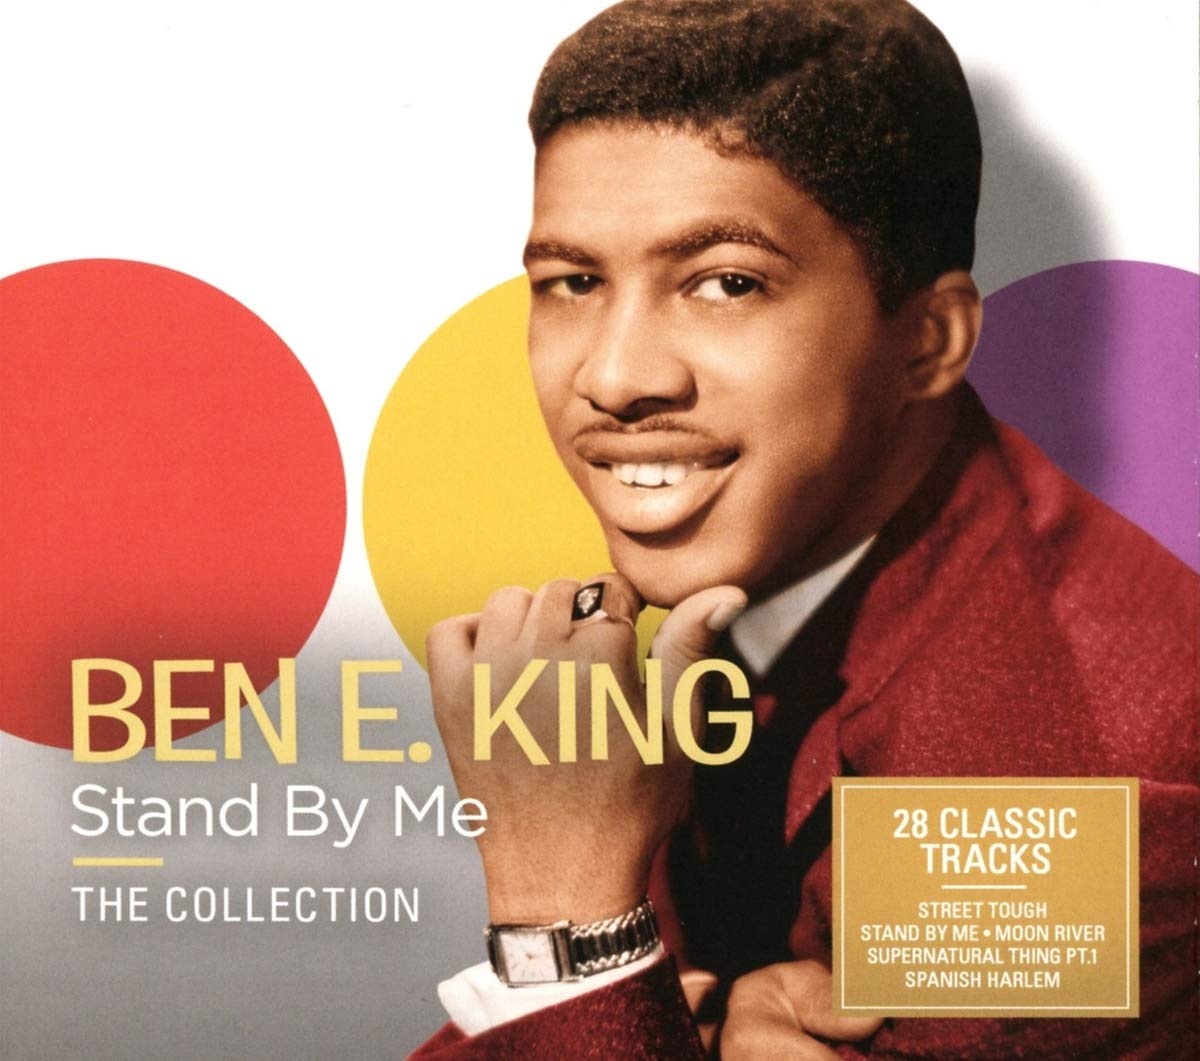 BEN E. KING - Stand By Me 2 CD купить в интернет магазине ЛегатоМюзик.